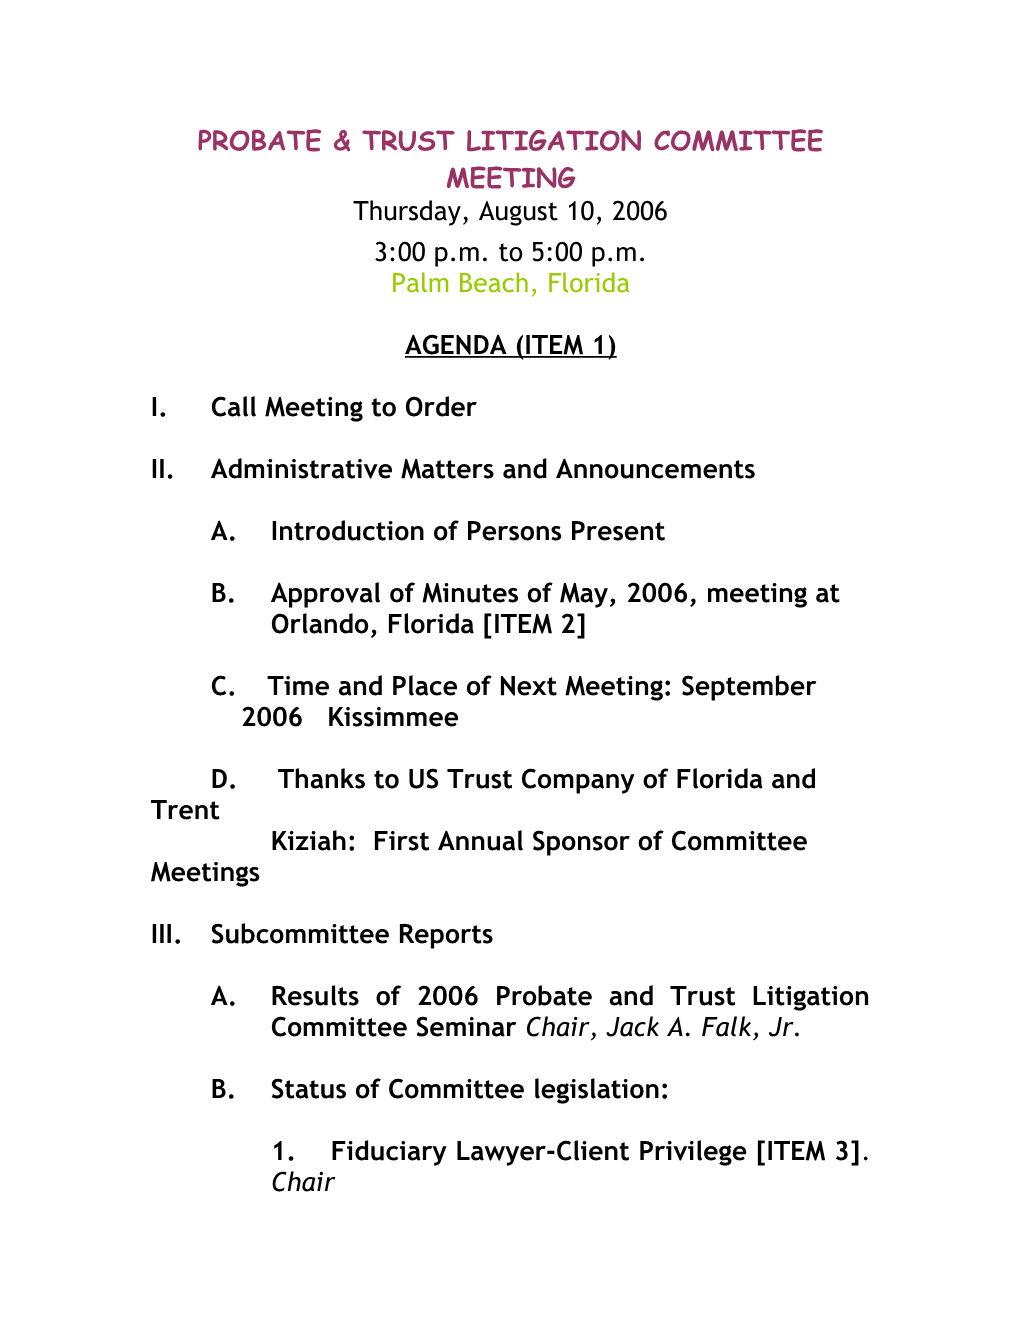 Probate & Trust Litigation Committee Meeting